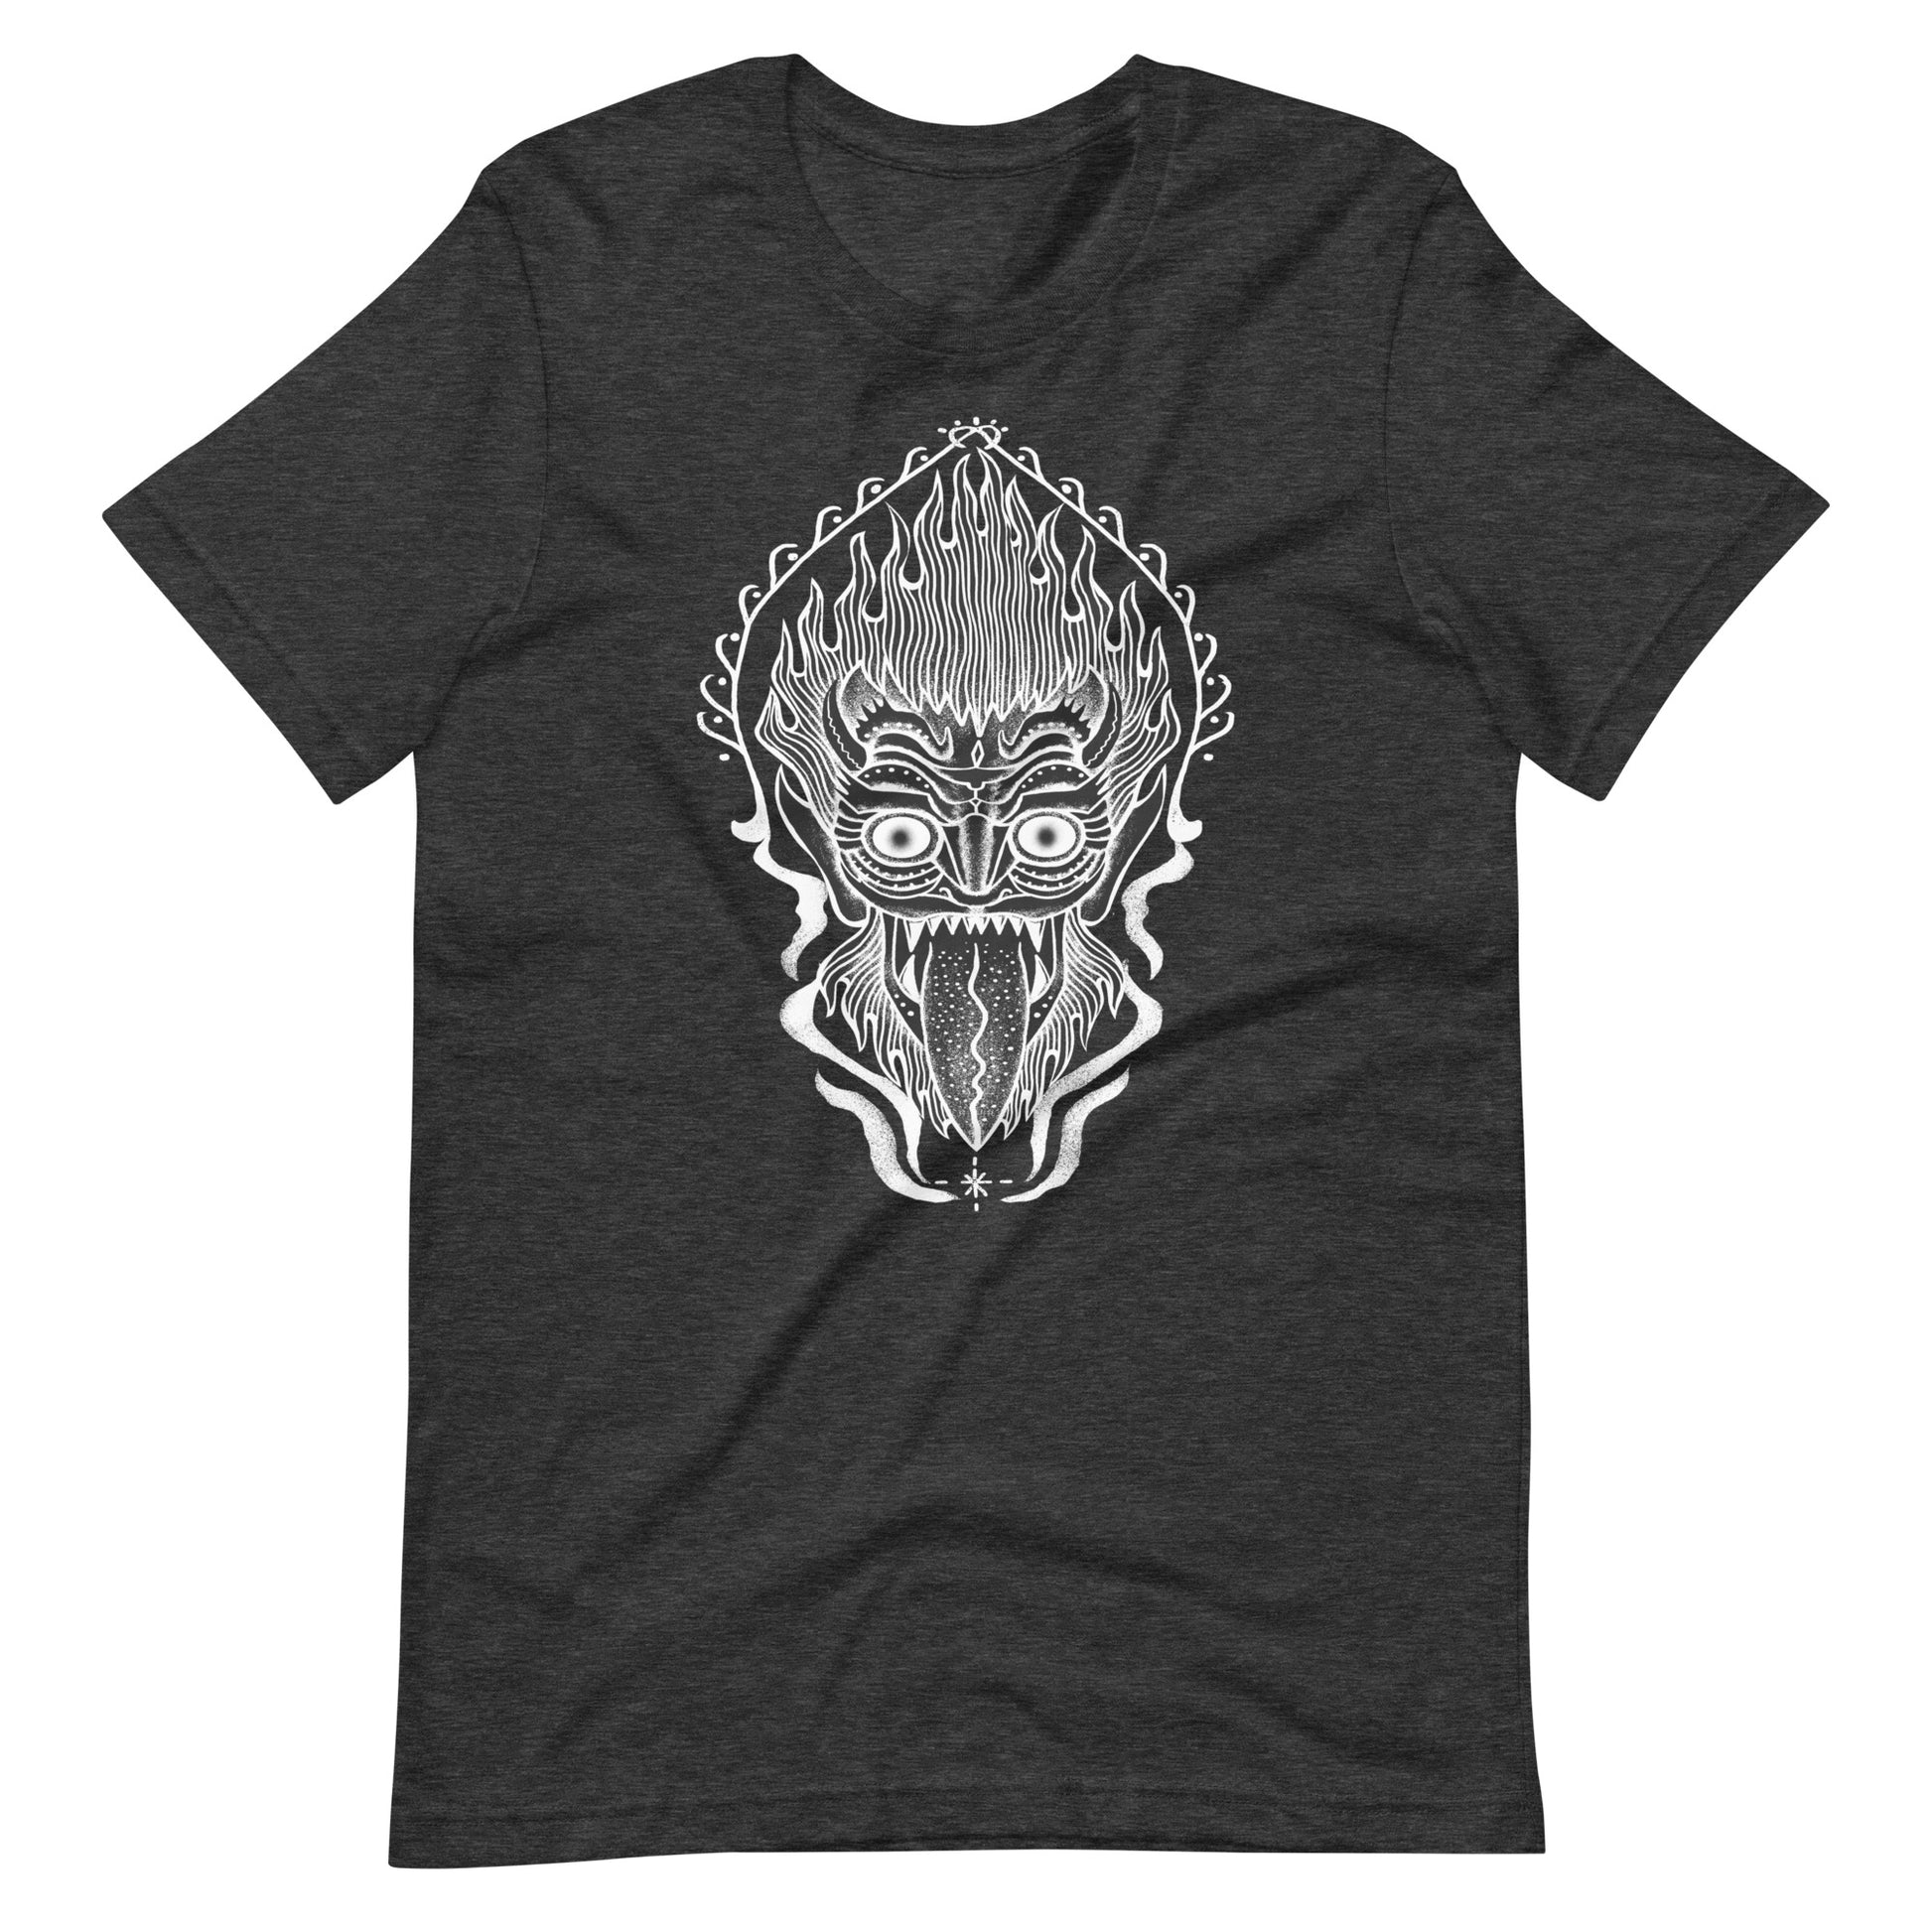 King of Fire - Men's t-shirt - Dark Grey Heather Front